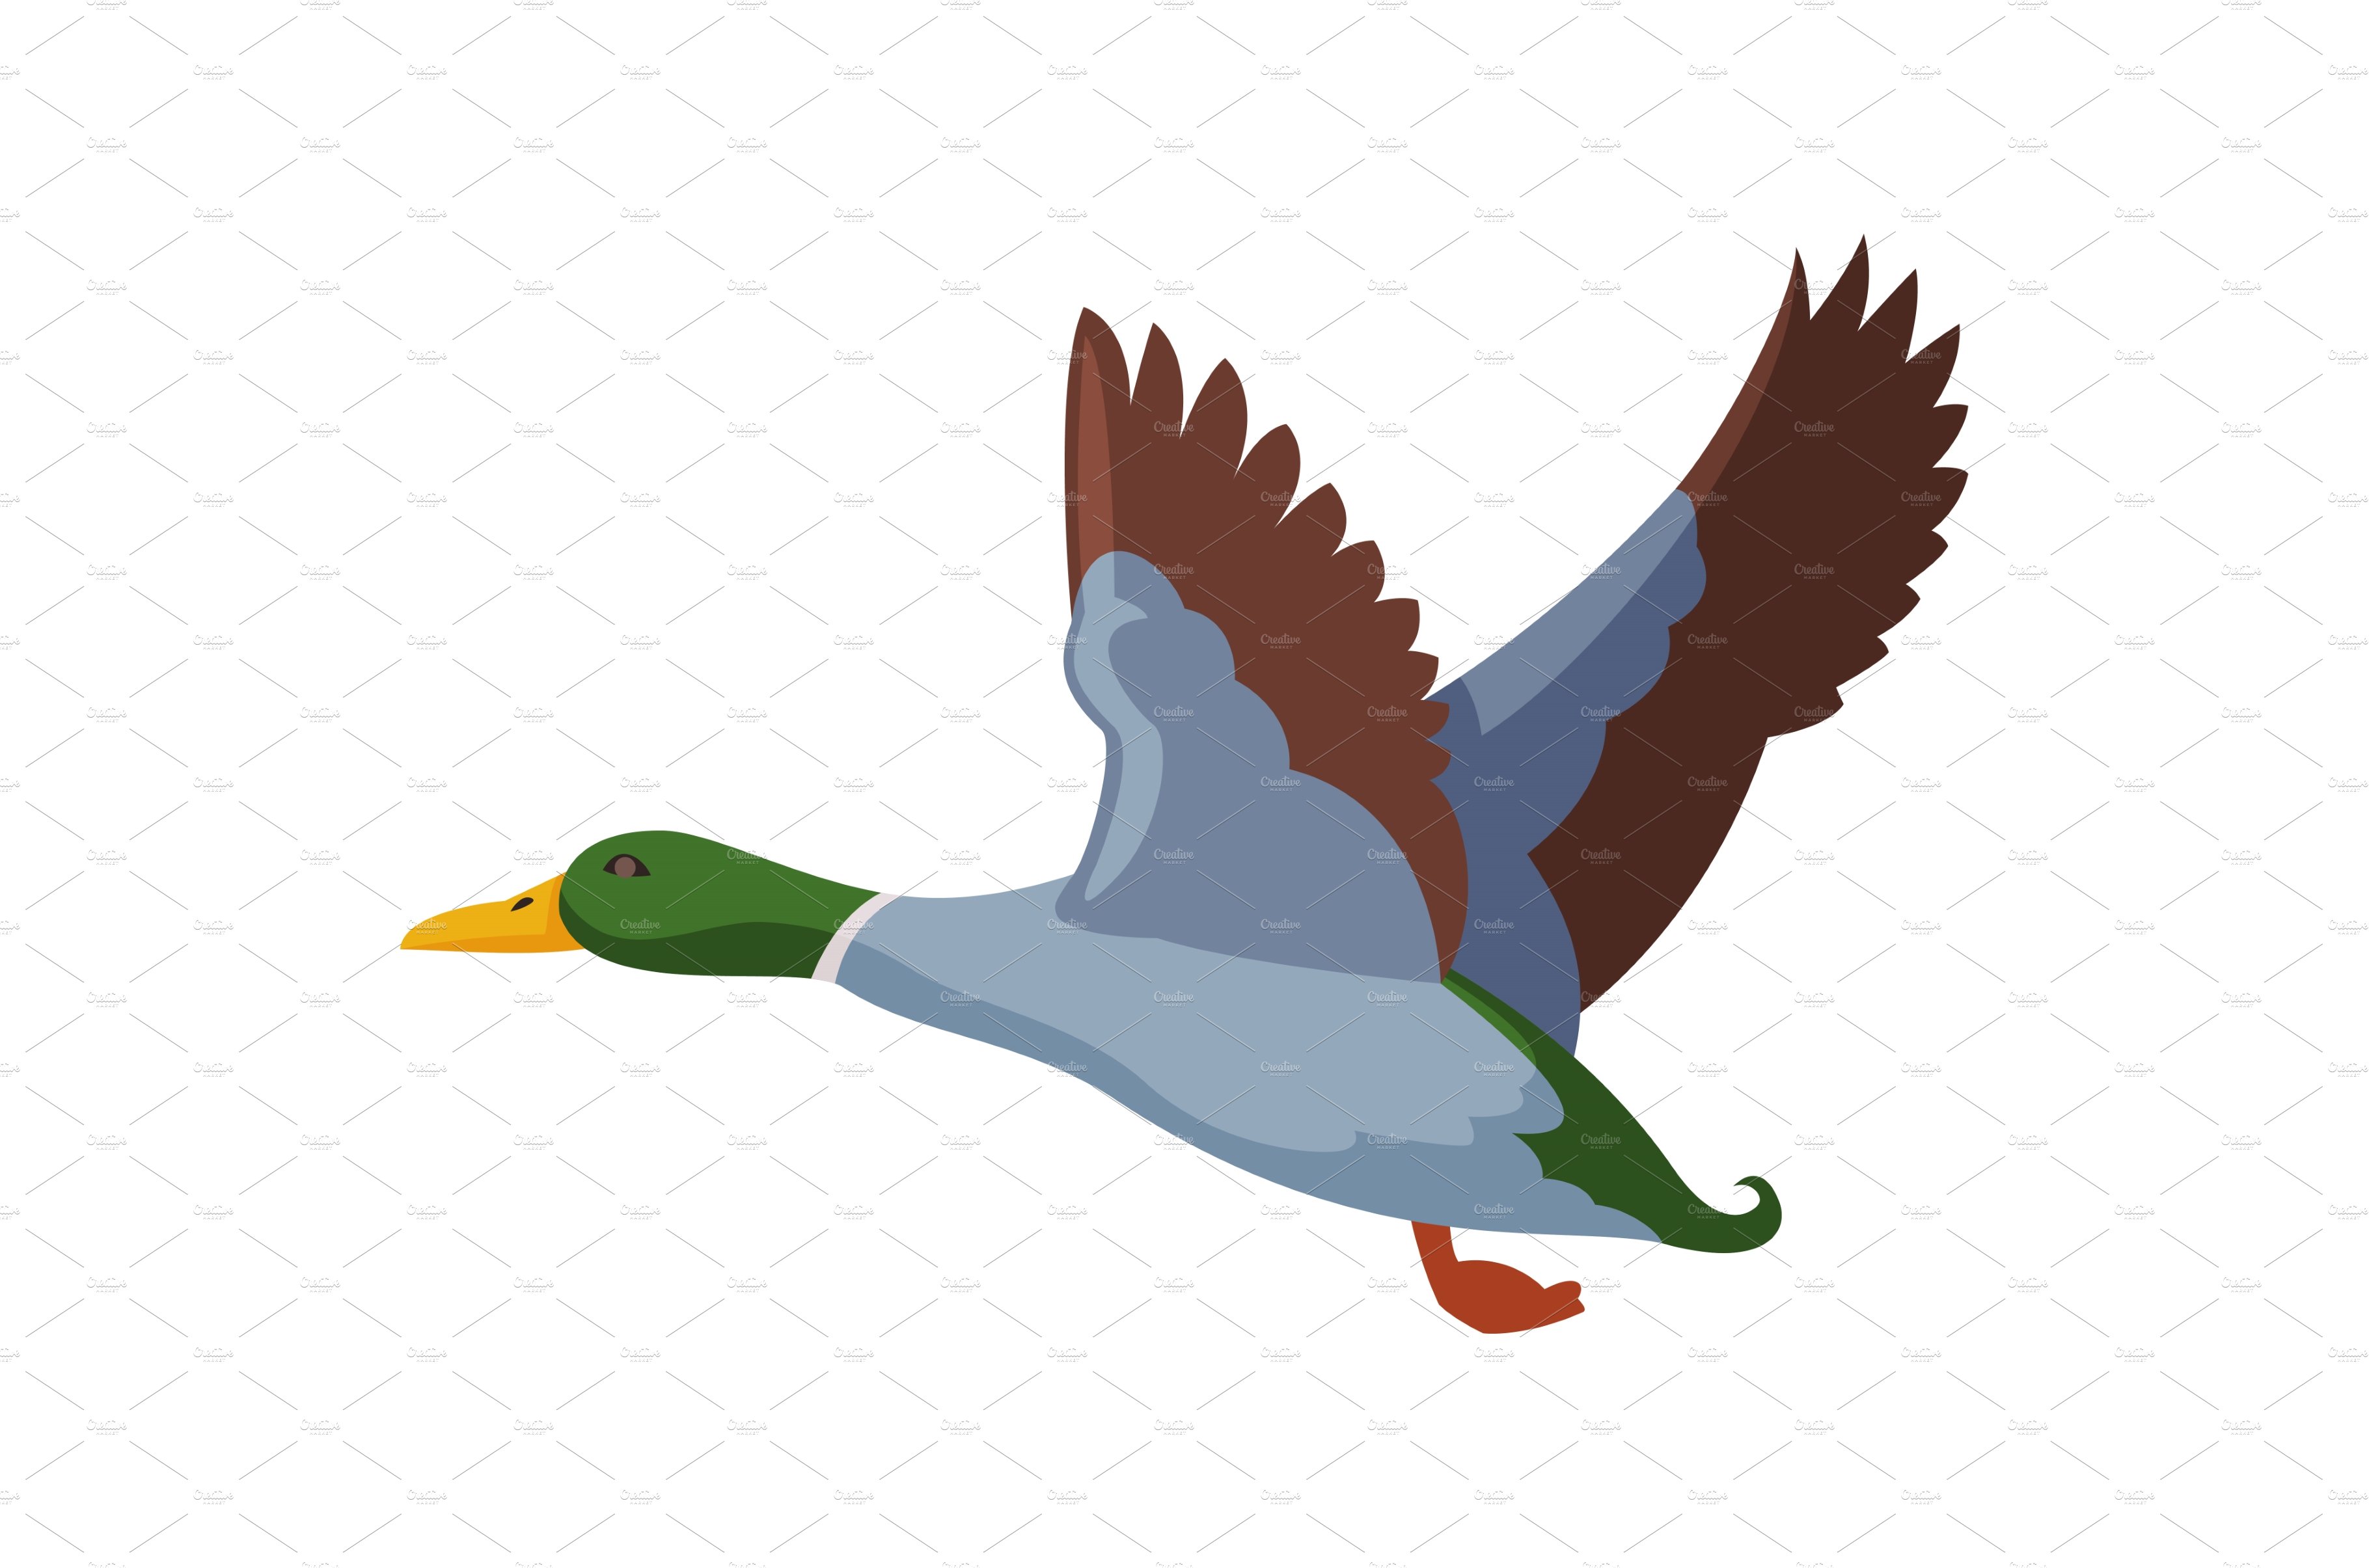 Flying Wild Mallard Duck Flat Style cover image.